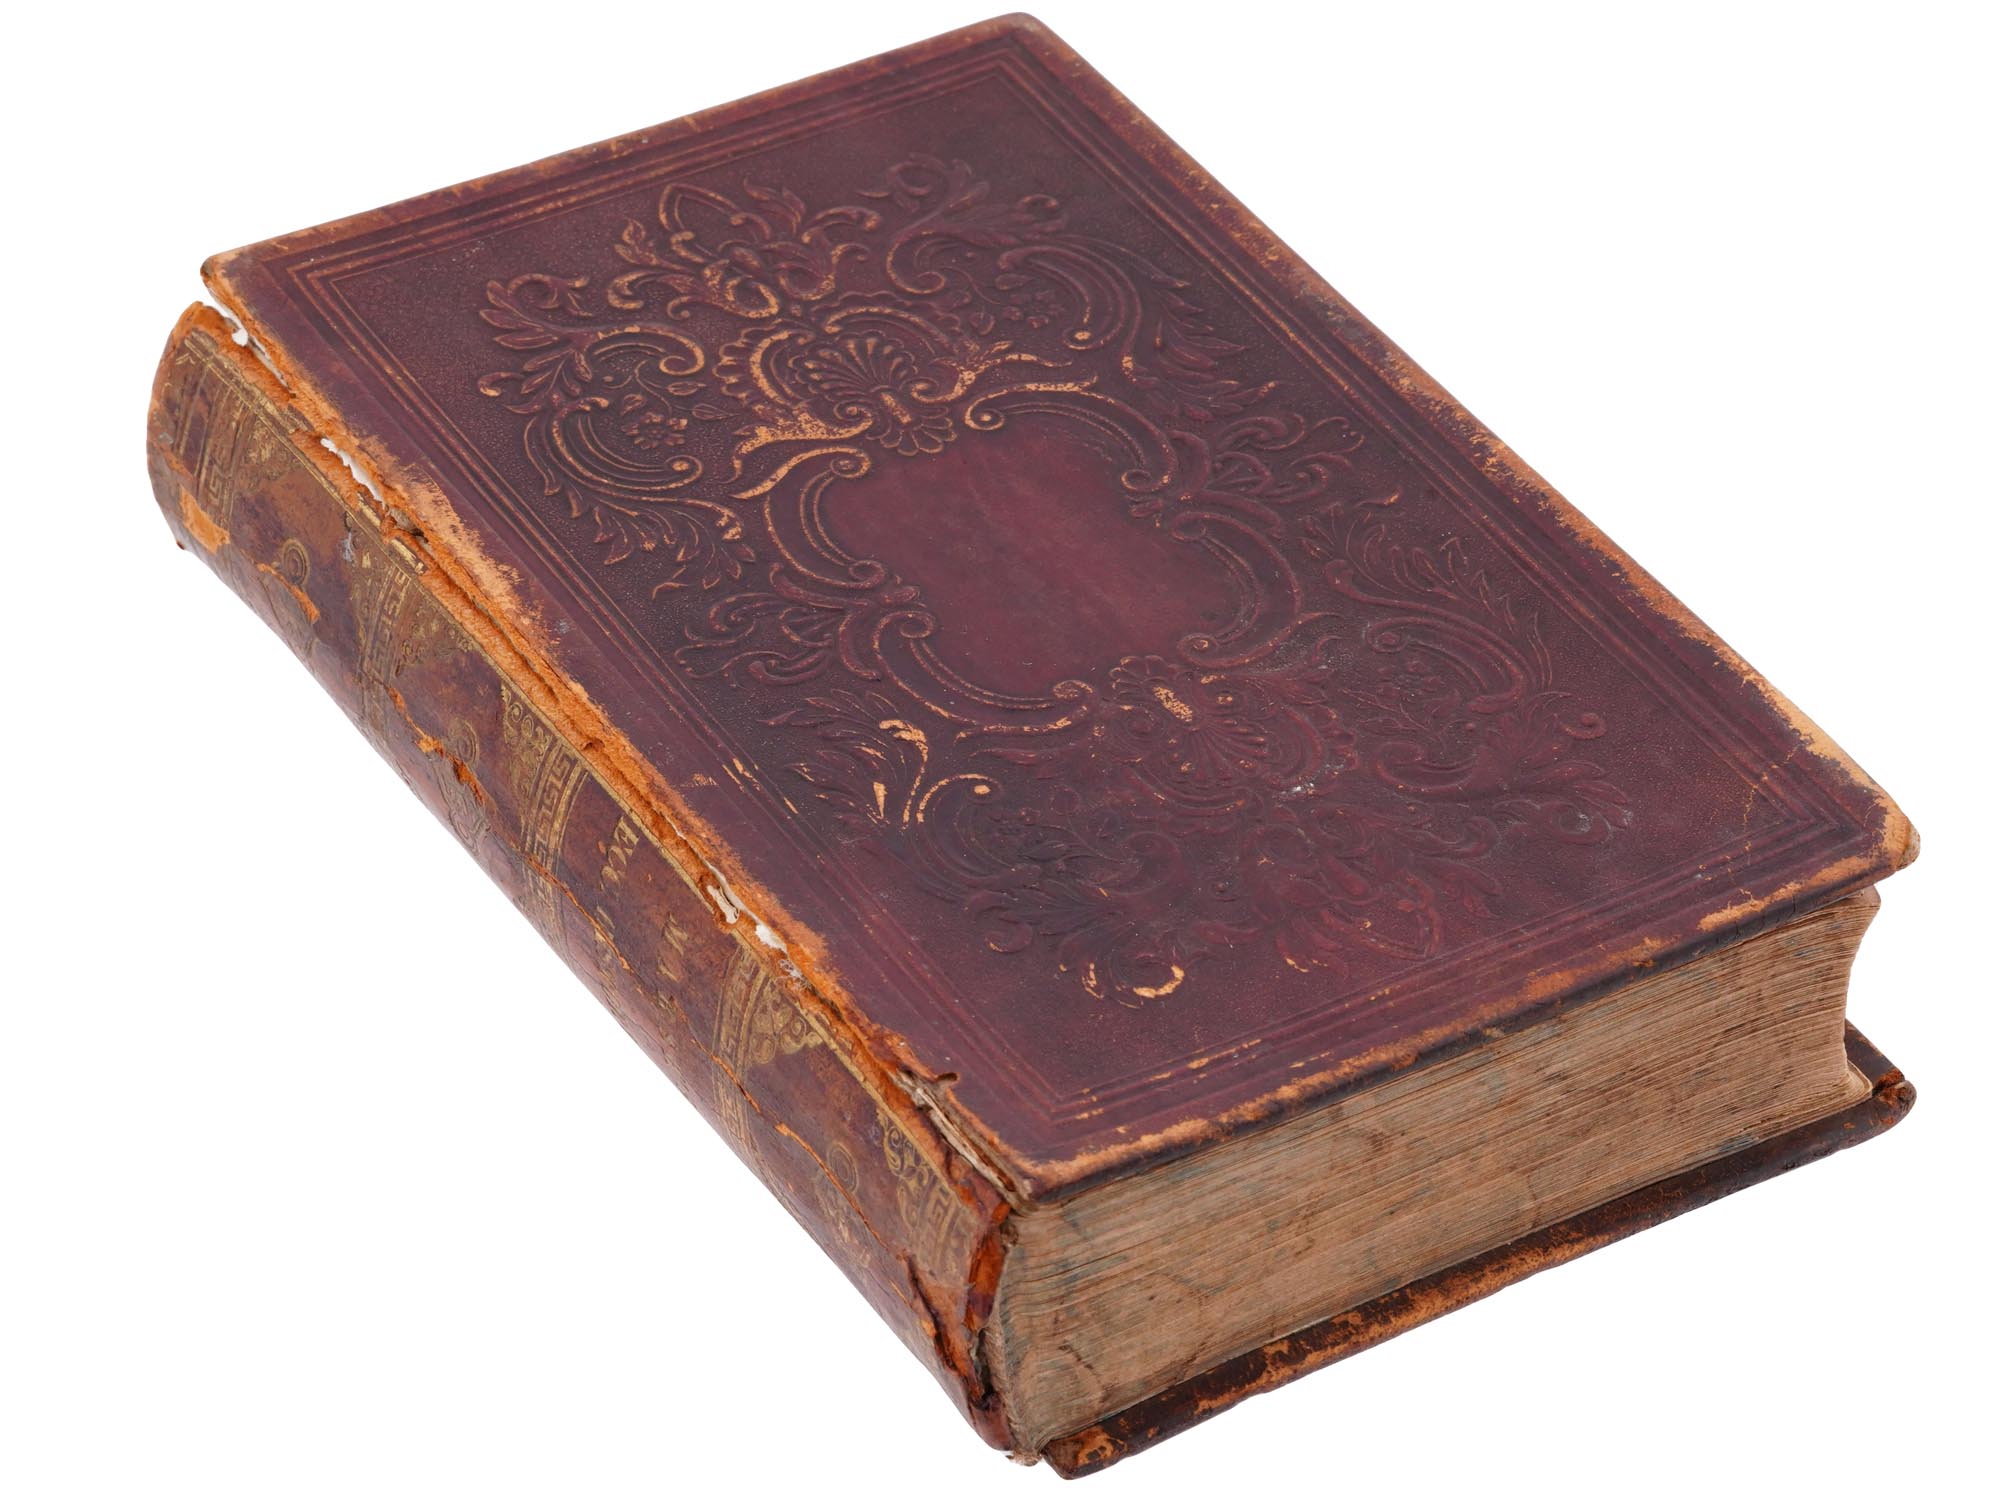 ANTIQUE 1846 GENERAL ECCLESIASTICAL HISTORY BOOK PIC-0